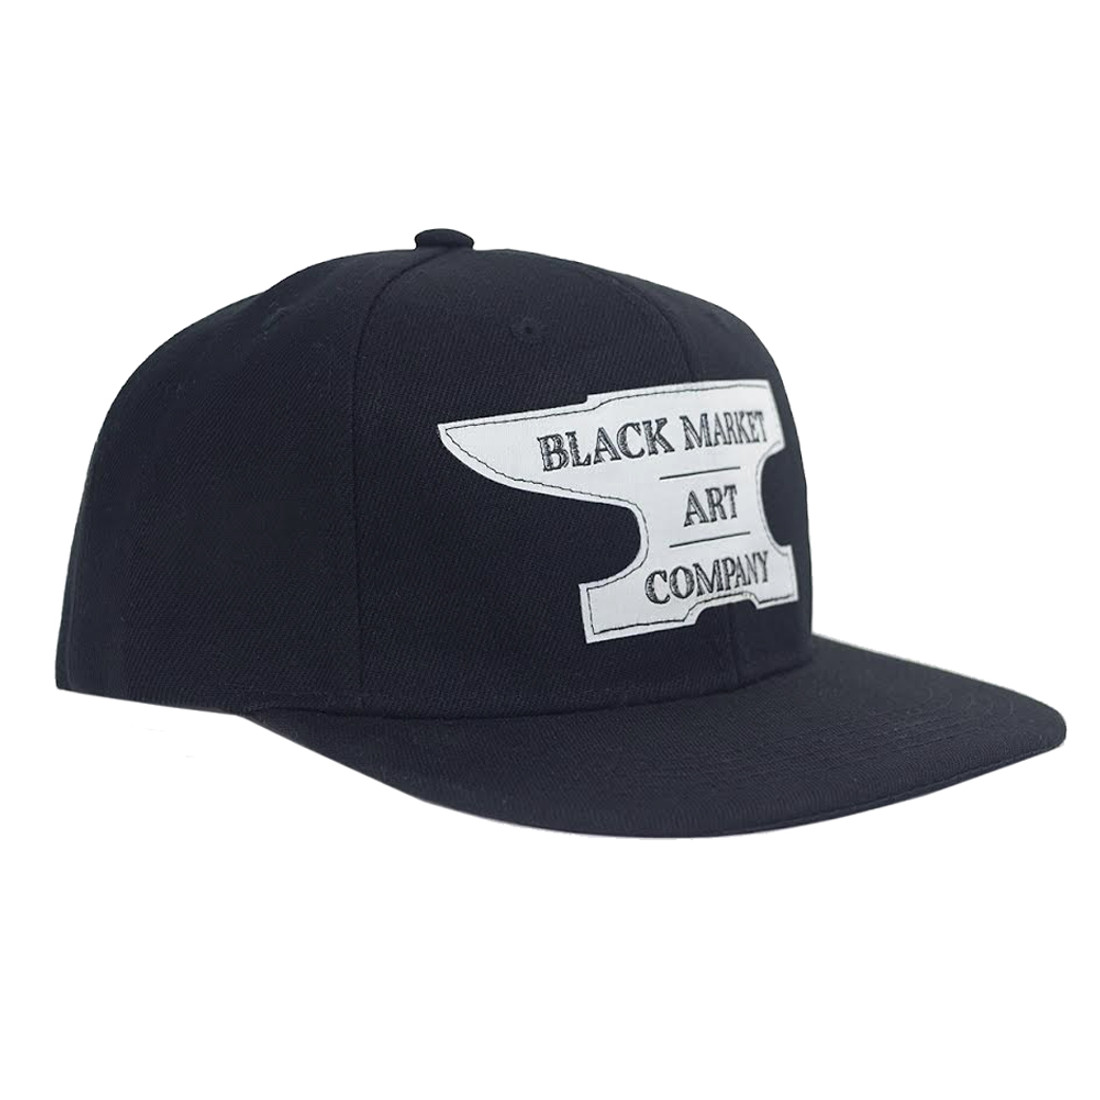 Black Market Art Co. Anvil Flat Bill Trucker Hat